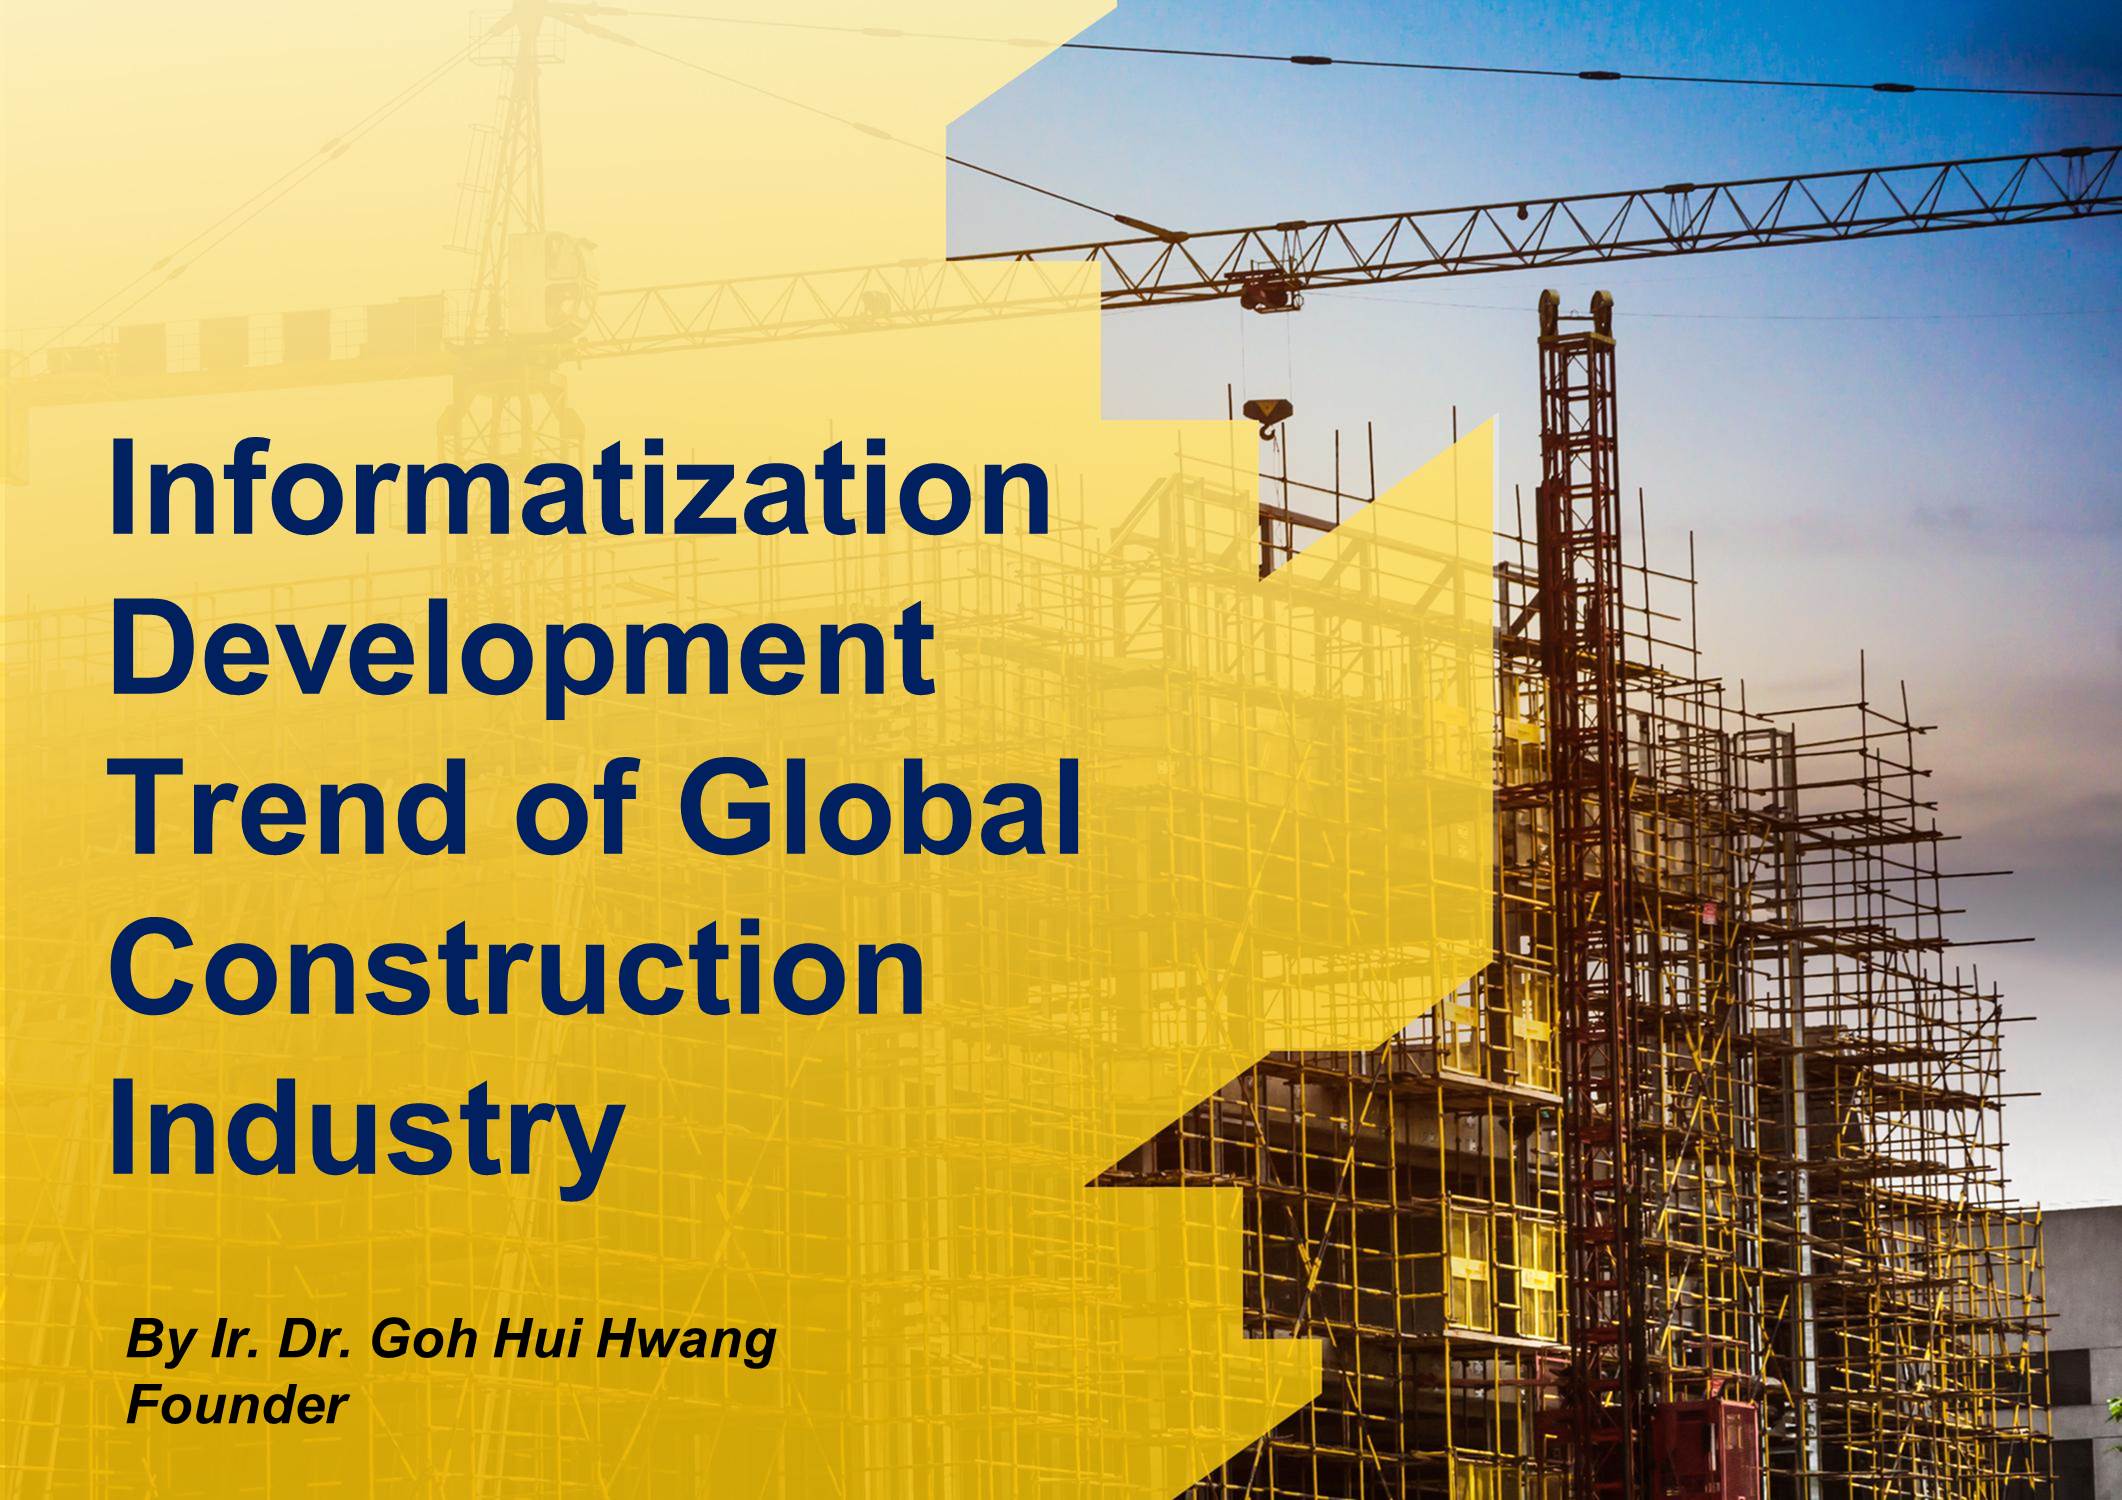 The Informatization Development Trend of Global Construction Industry